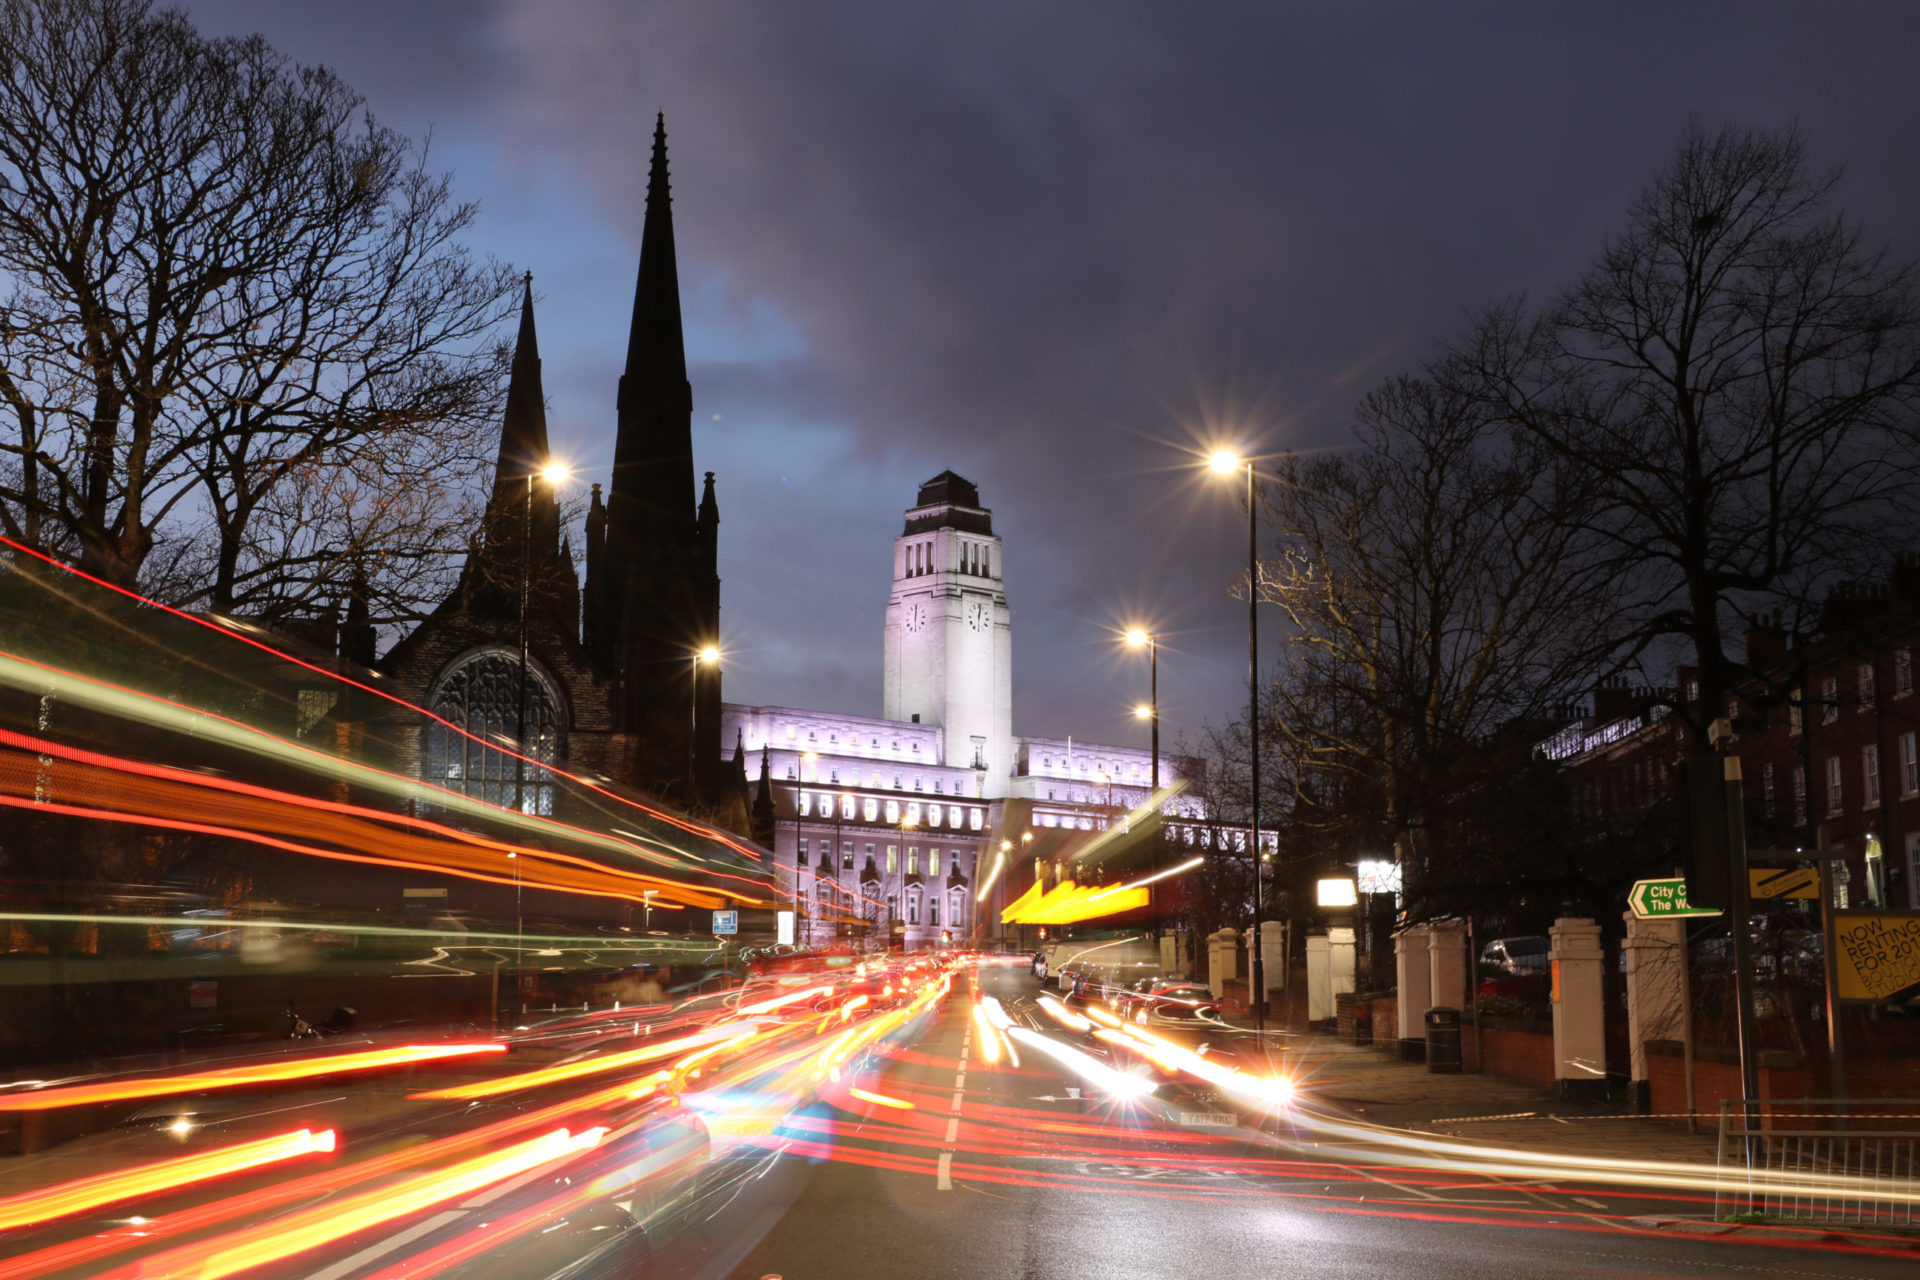 University of Leeds Parkinson Building at night